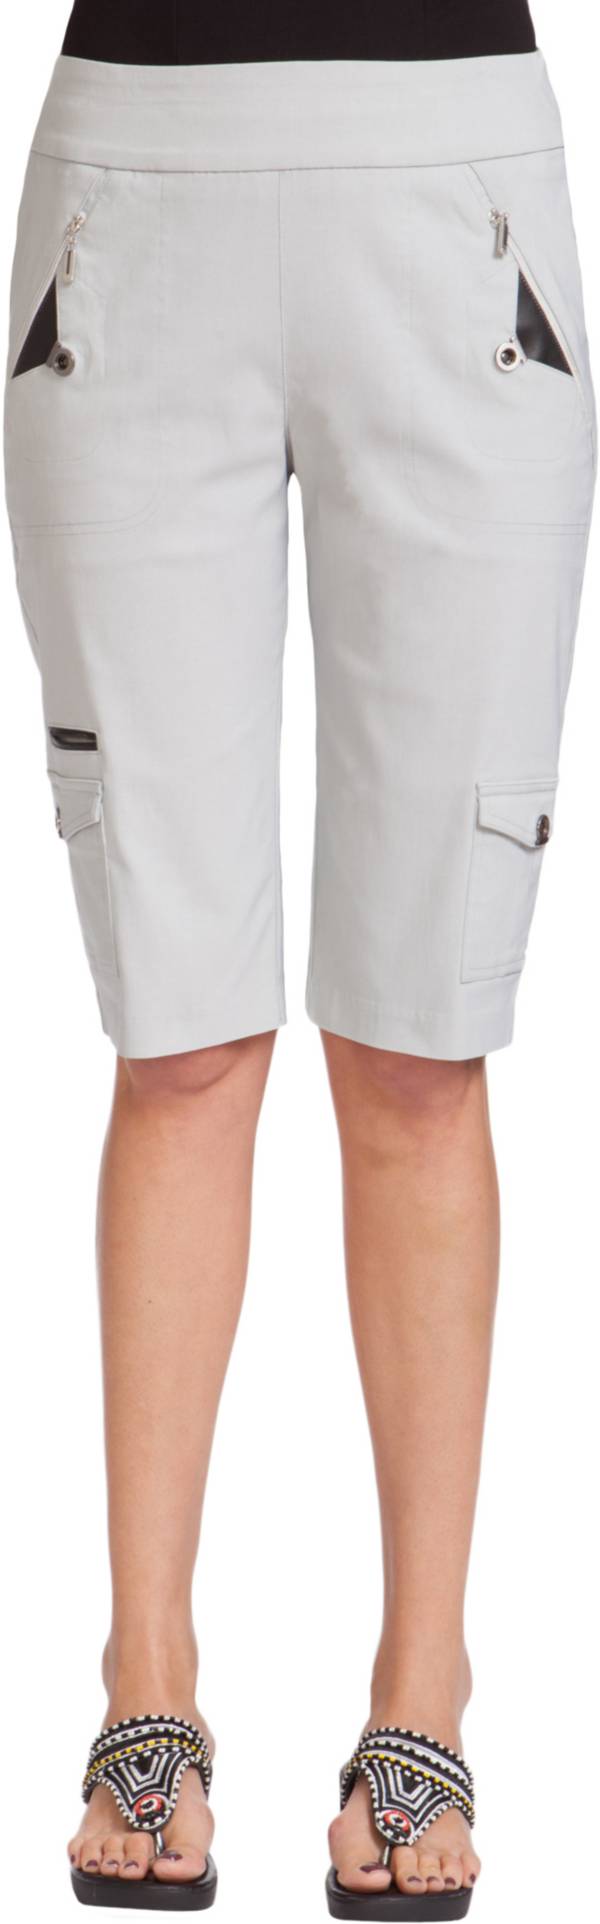 Jamie Sadock Women's New Skinnyliscious Knee Capris product image